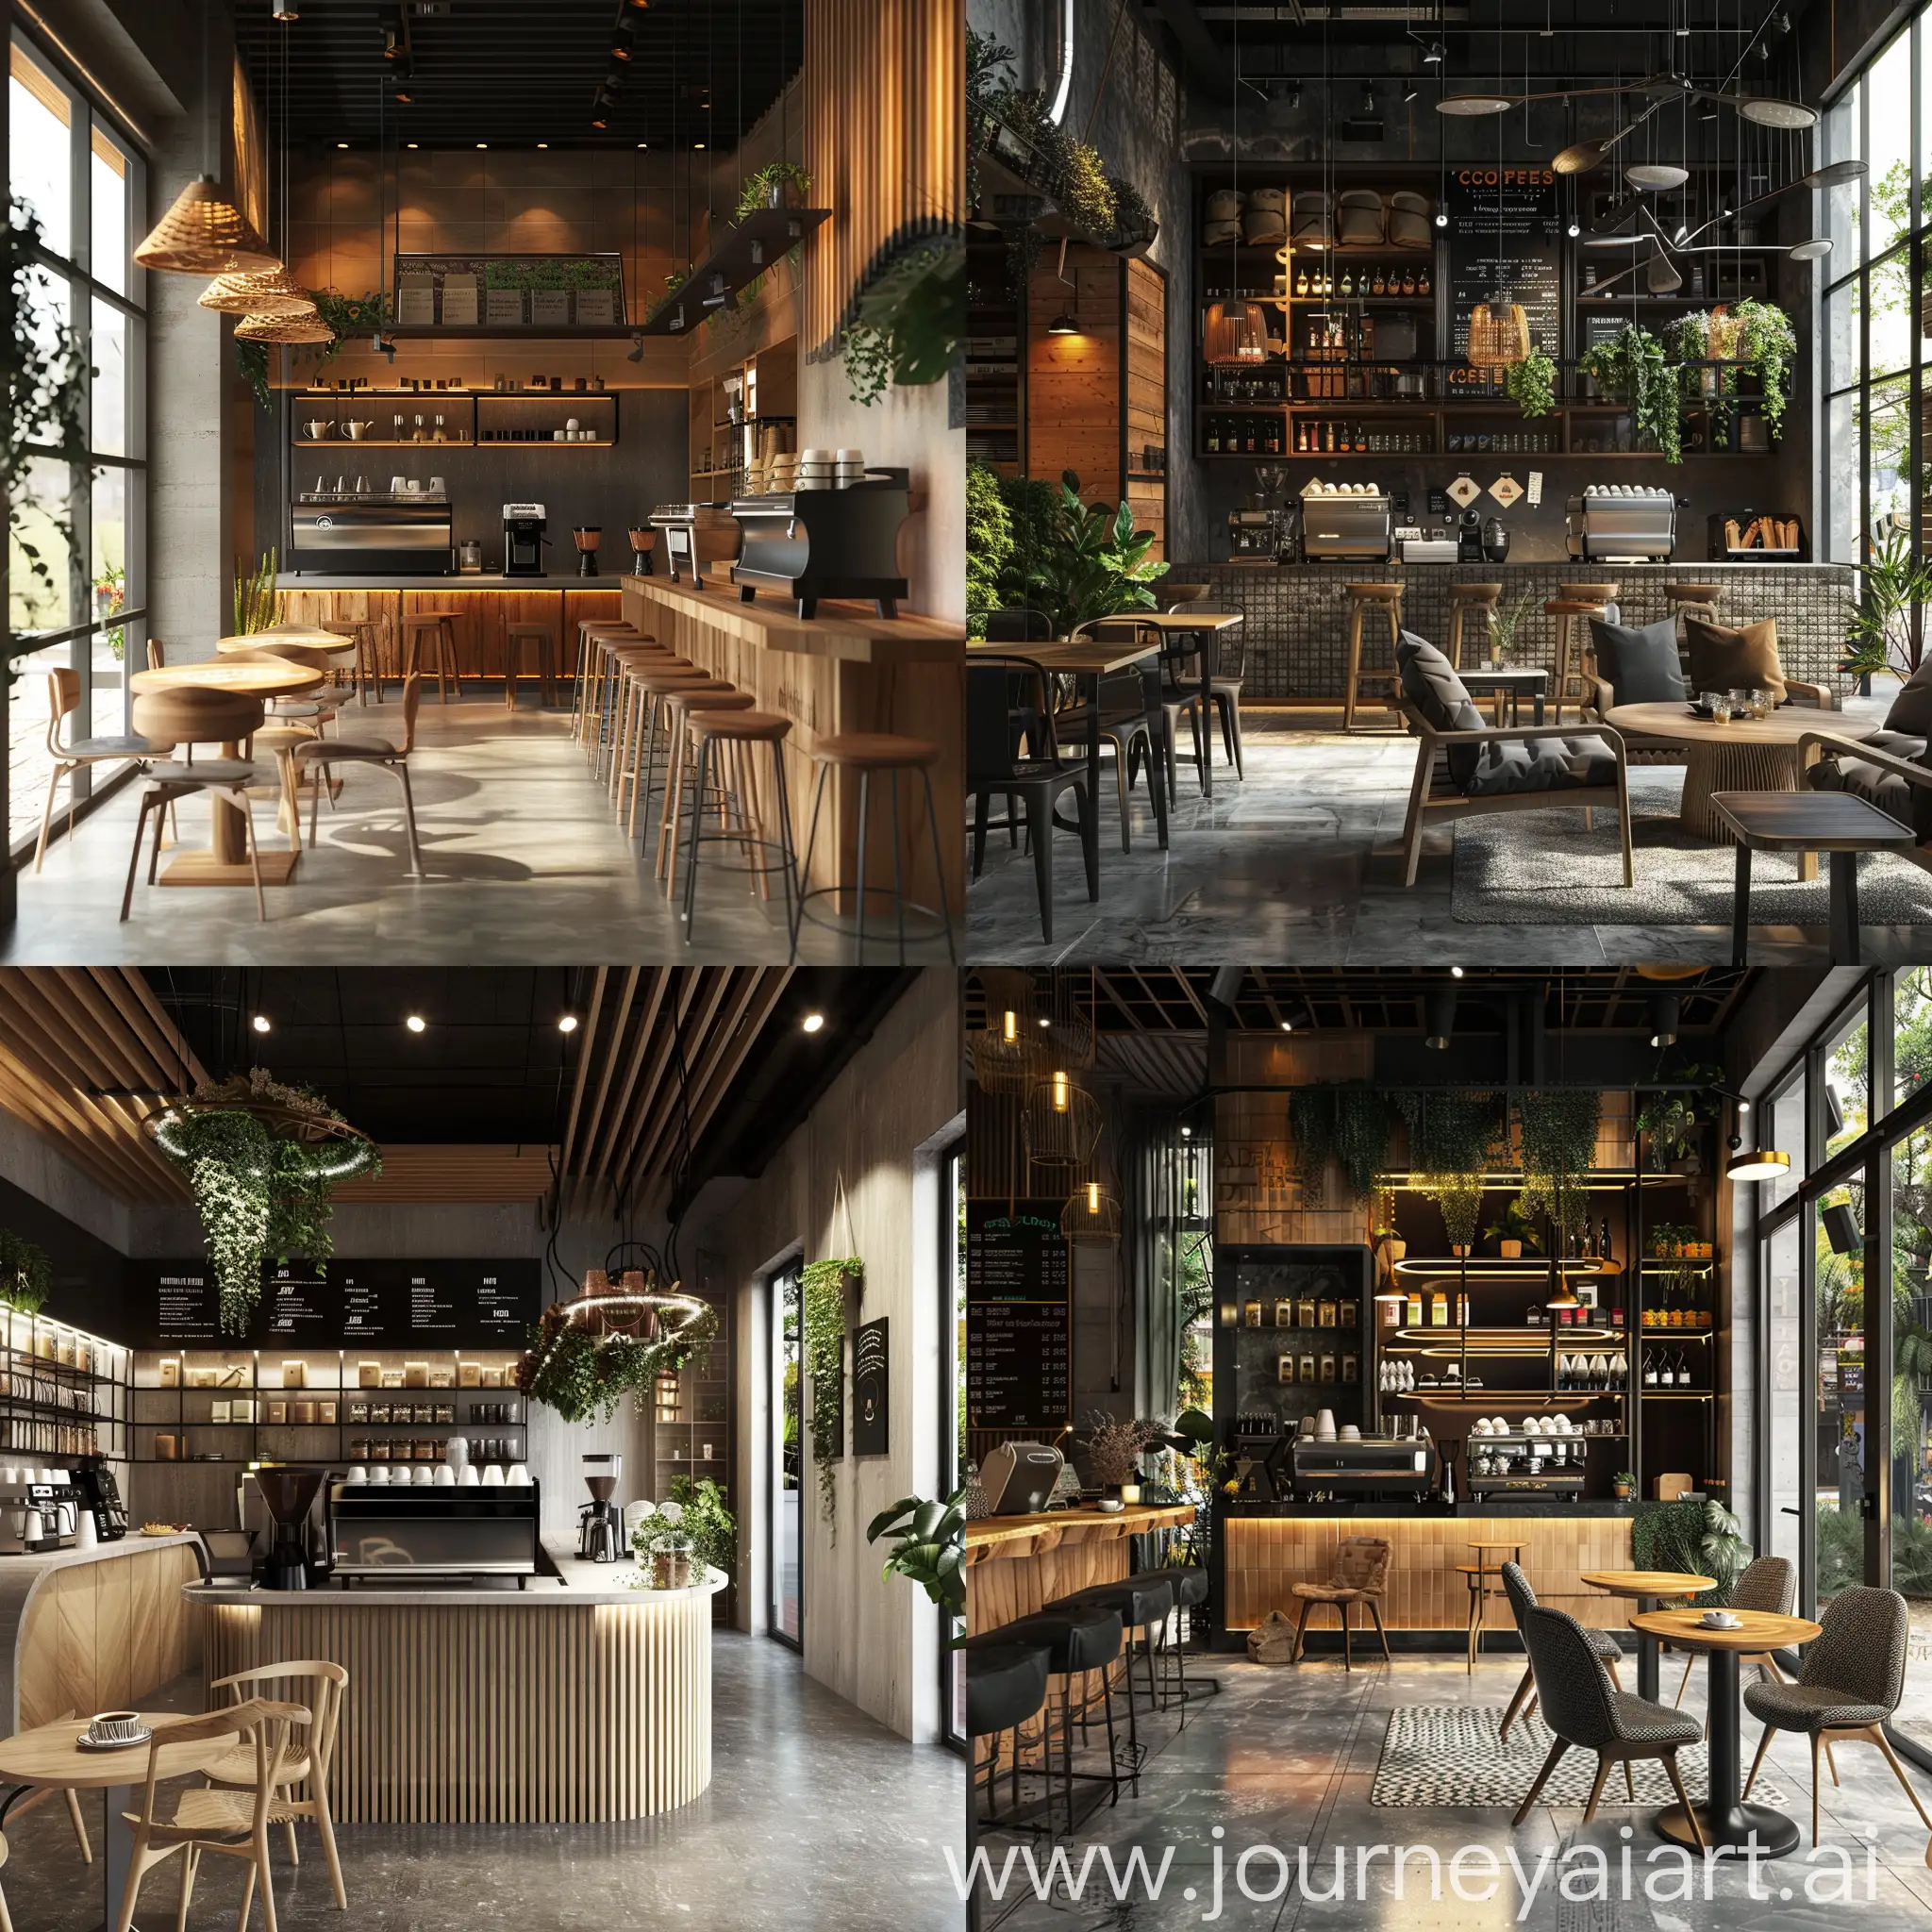 Coffe shop interieu with biliar smool space